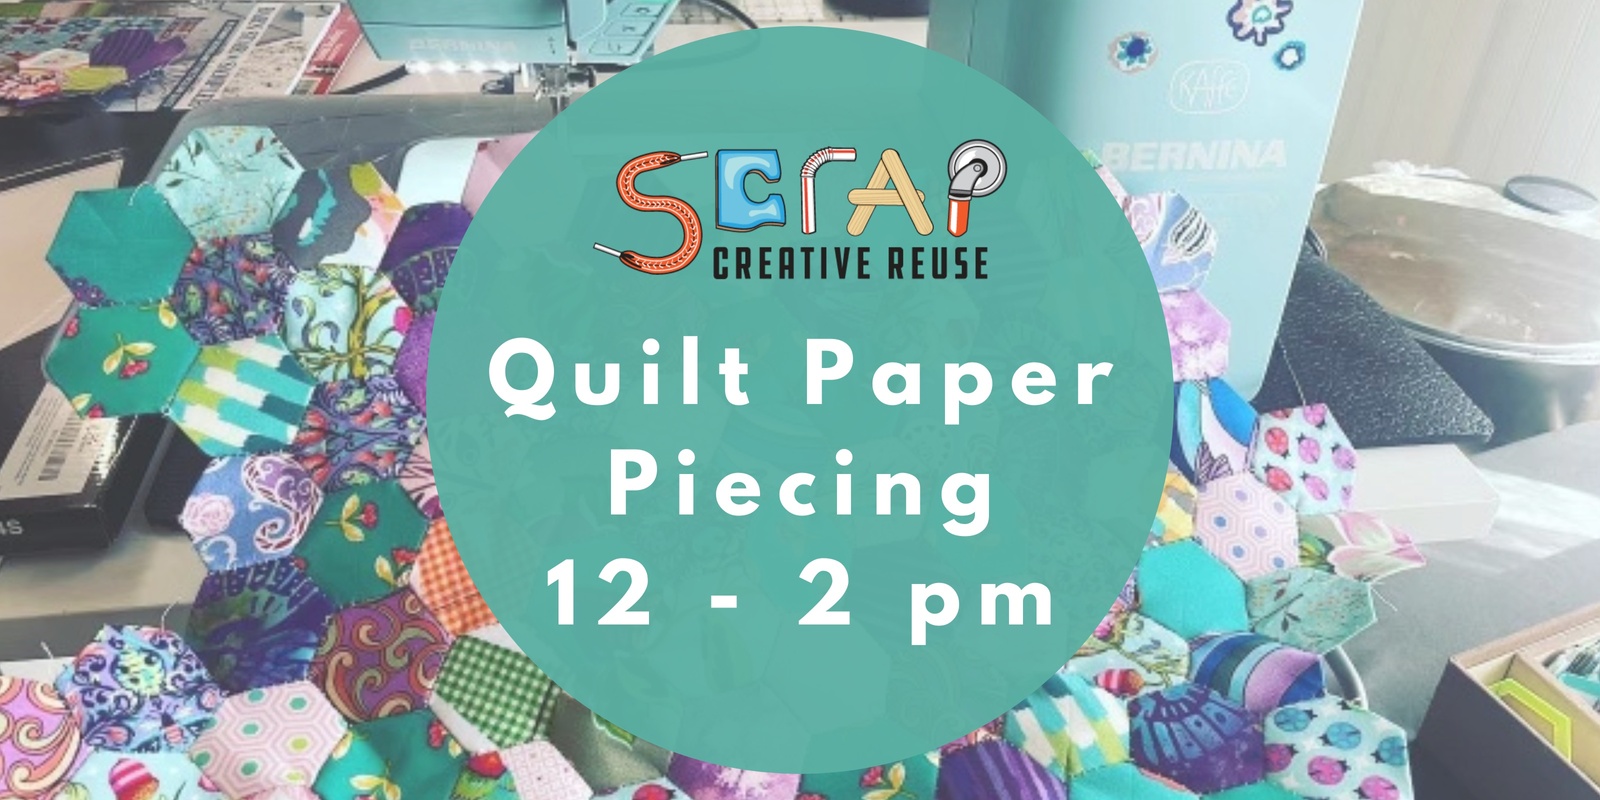 Banner image for SCRAP's Quilt Paper Piecing